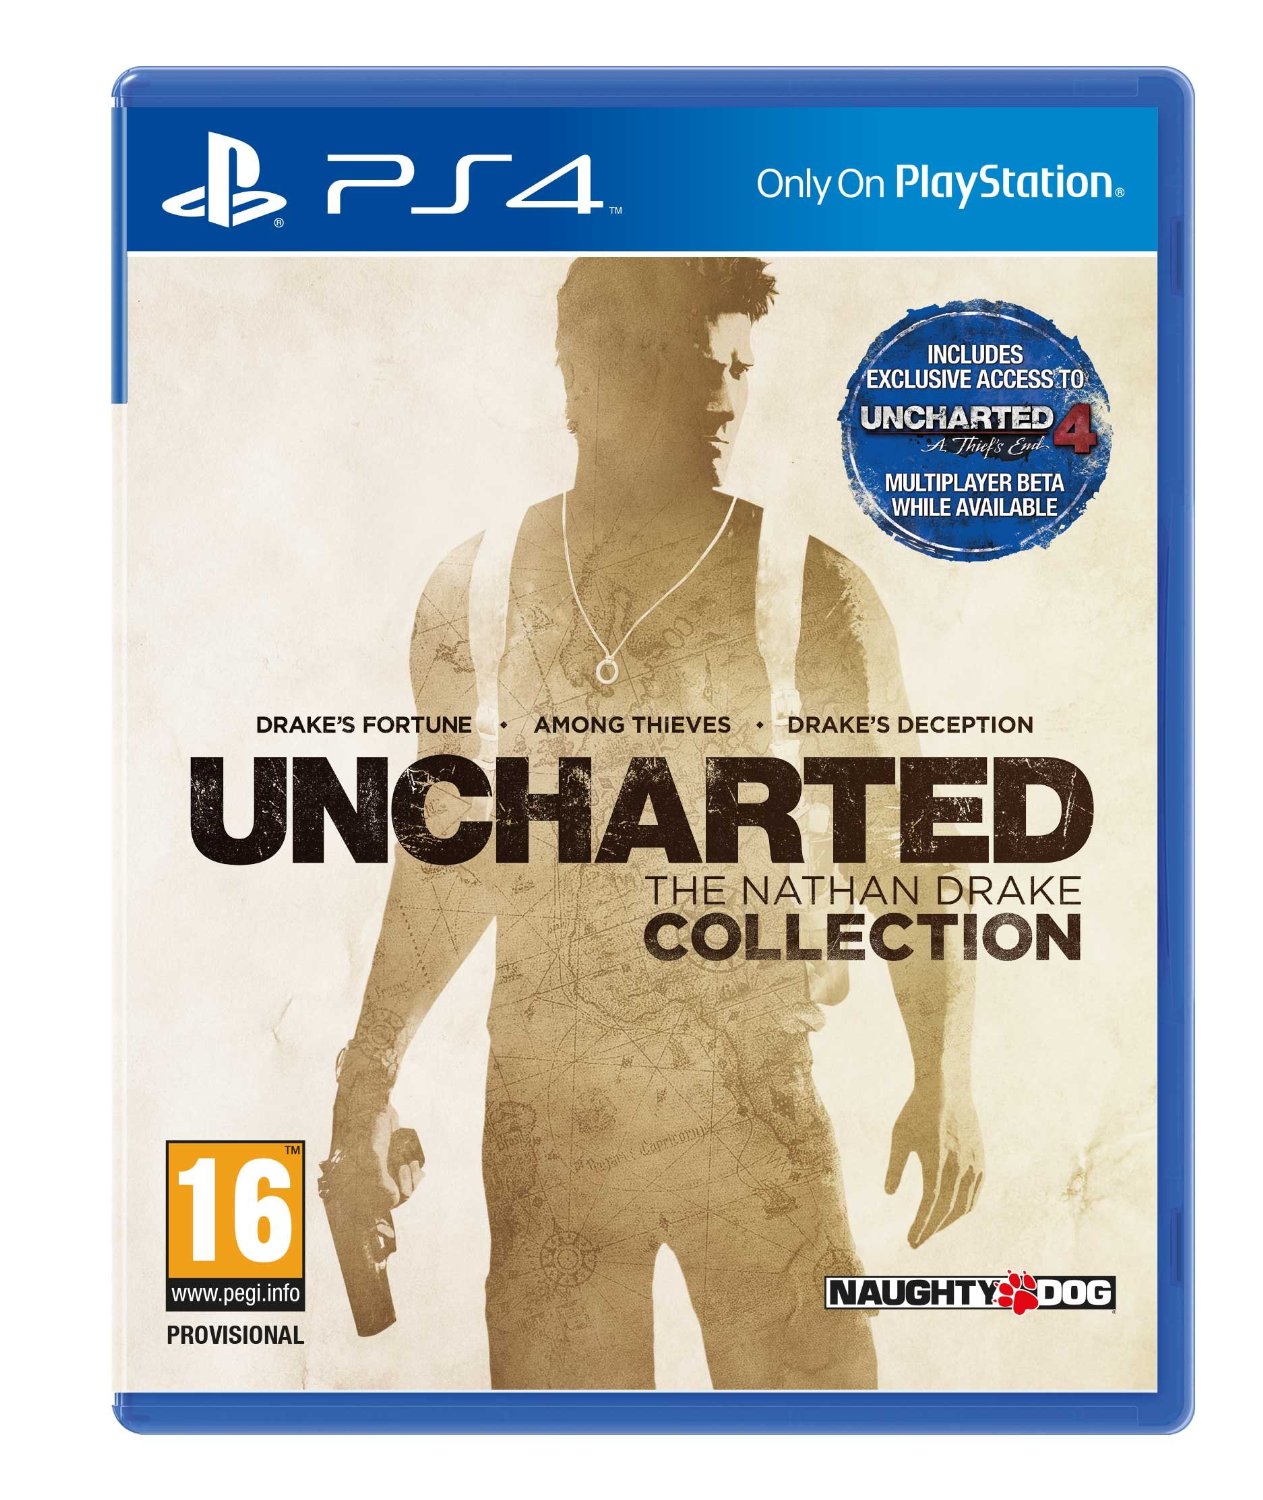 Uncharted: The Nathan Drake Collection Digital Copy CD Key (Playstation 4): RoW (USA  Australia etc)